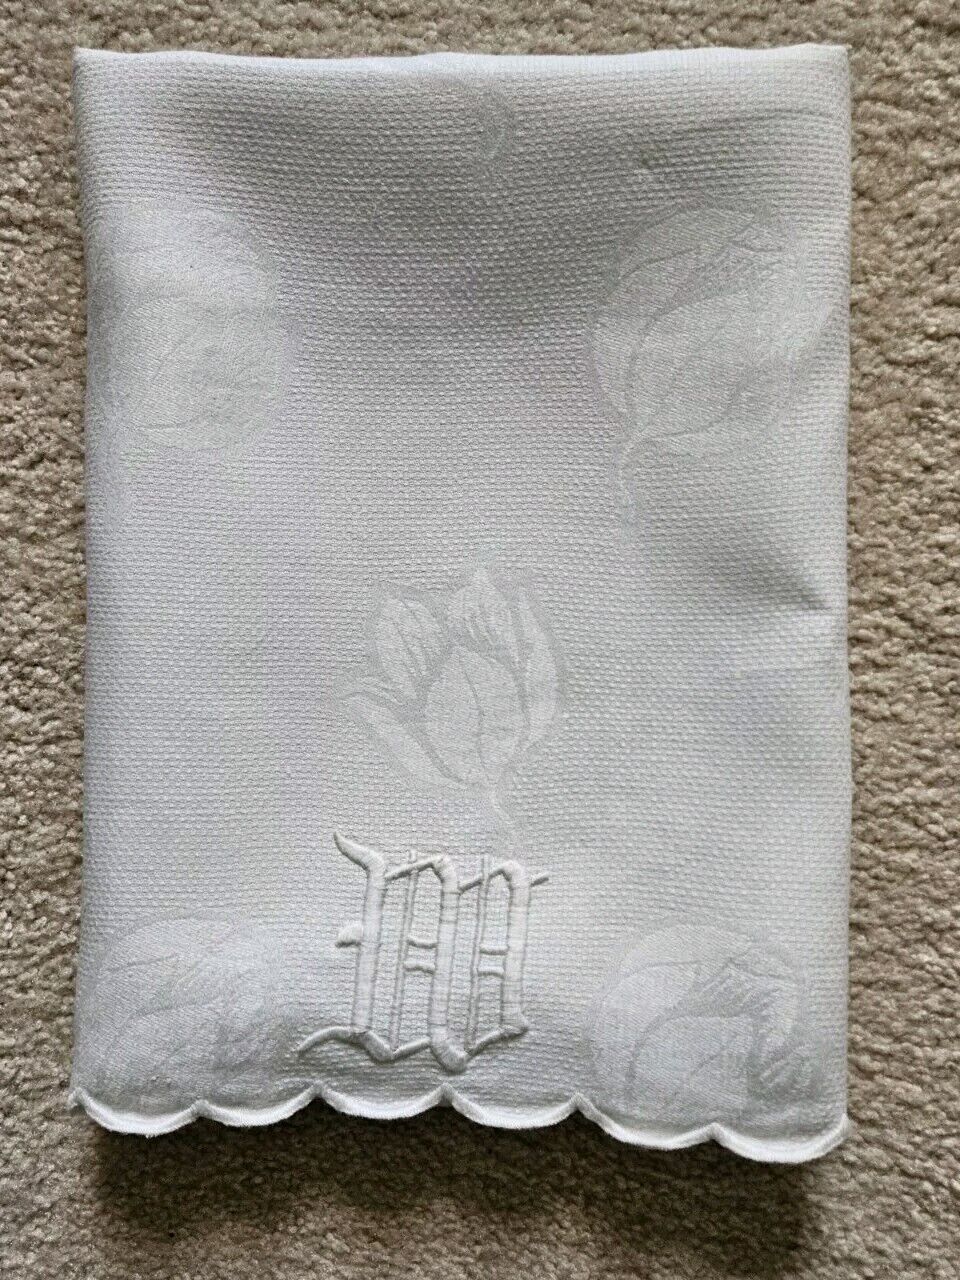 Antique Linen floral Damask Large Towel Scallop Edge Monogram M Embroidered